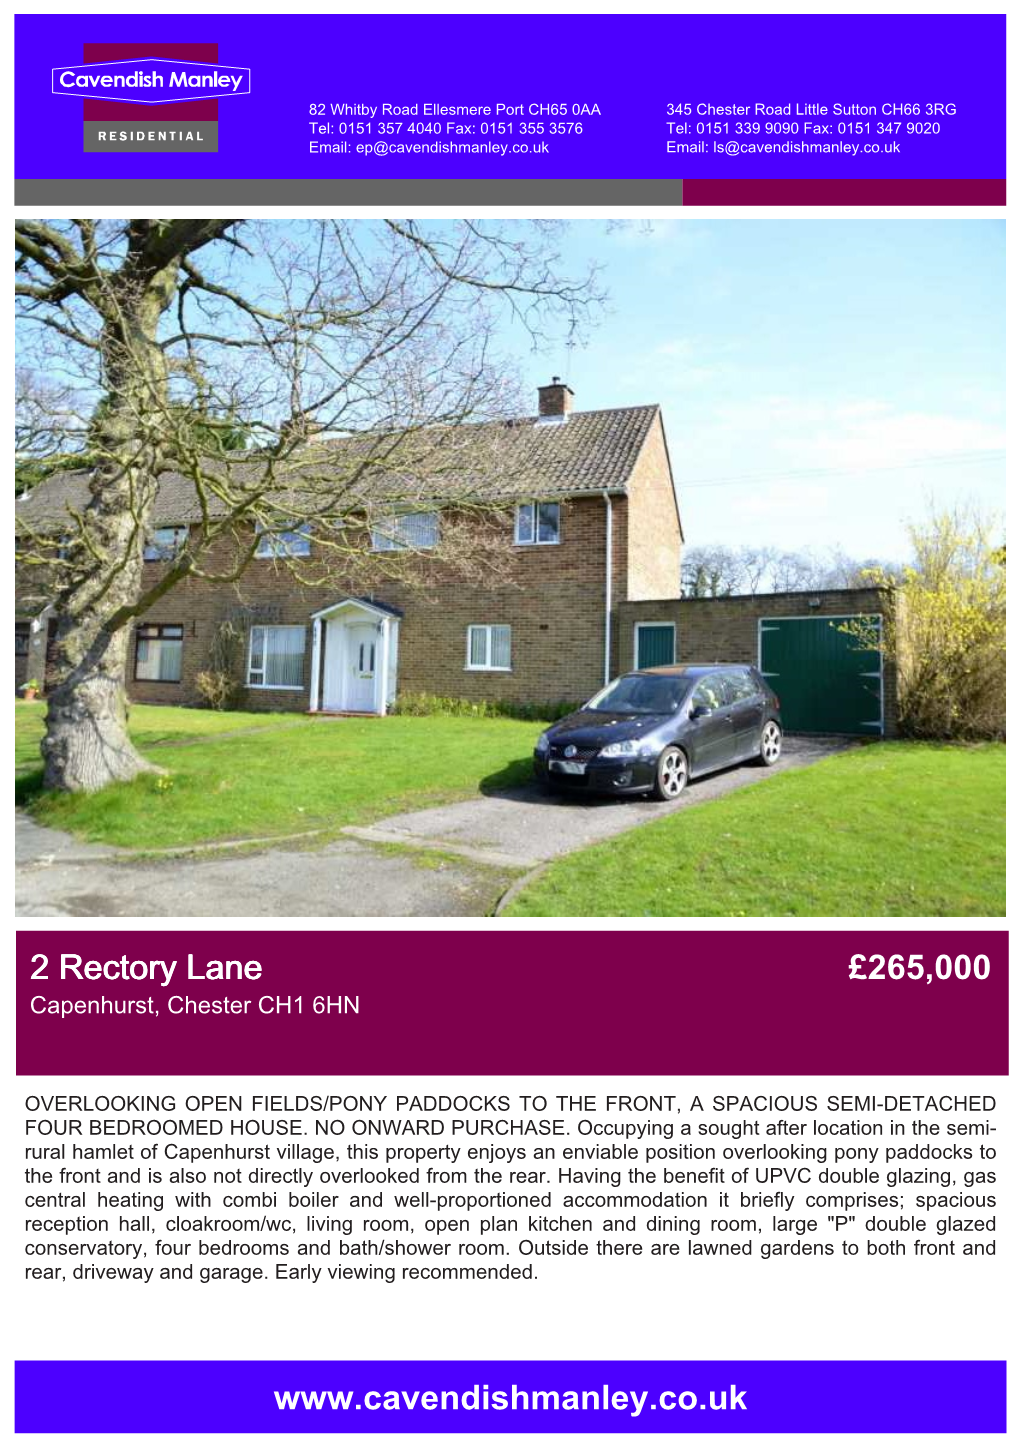 2 Rectory Lane £265,000